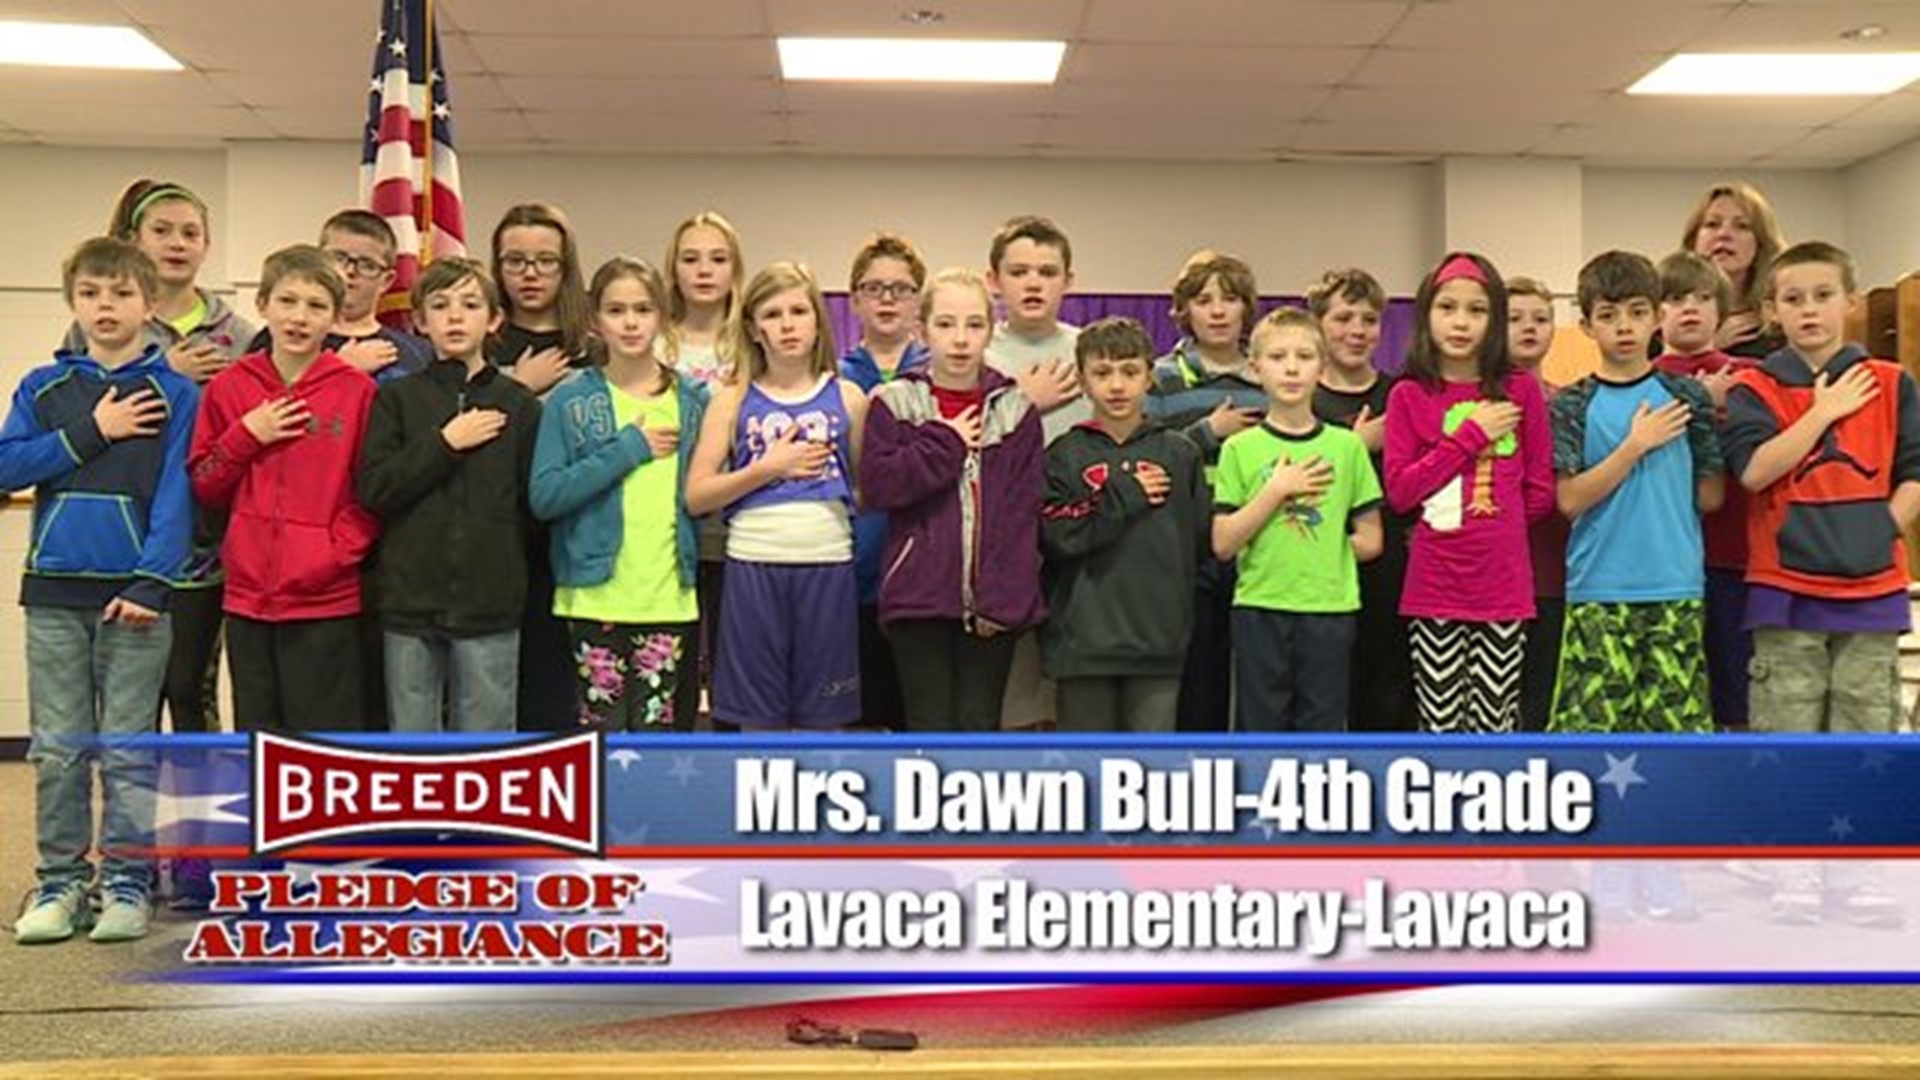 Lavaca Elementary, Lavaca - Mrs. Dawn Bull - 4th Grade